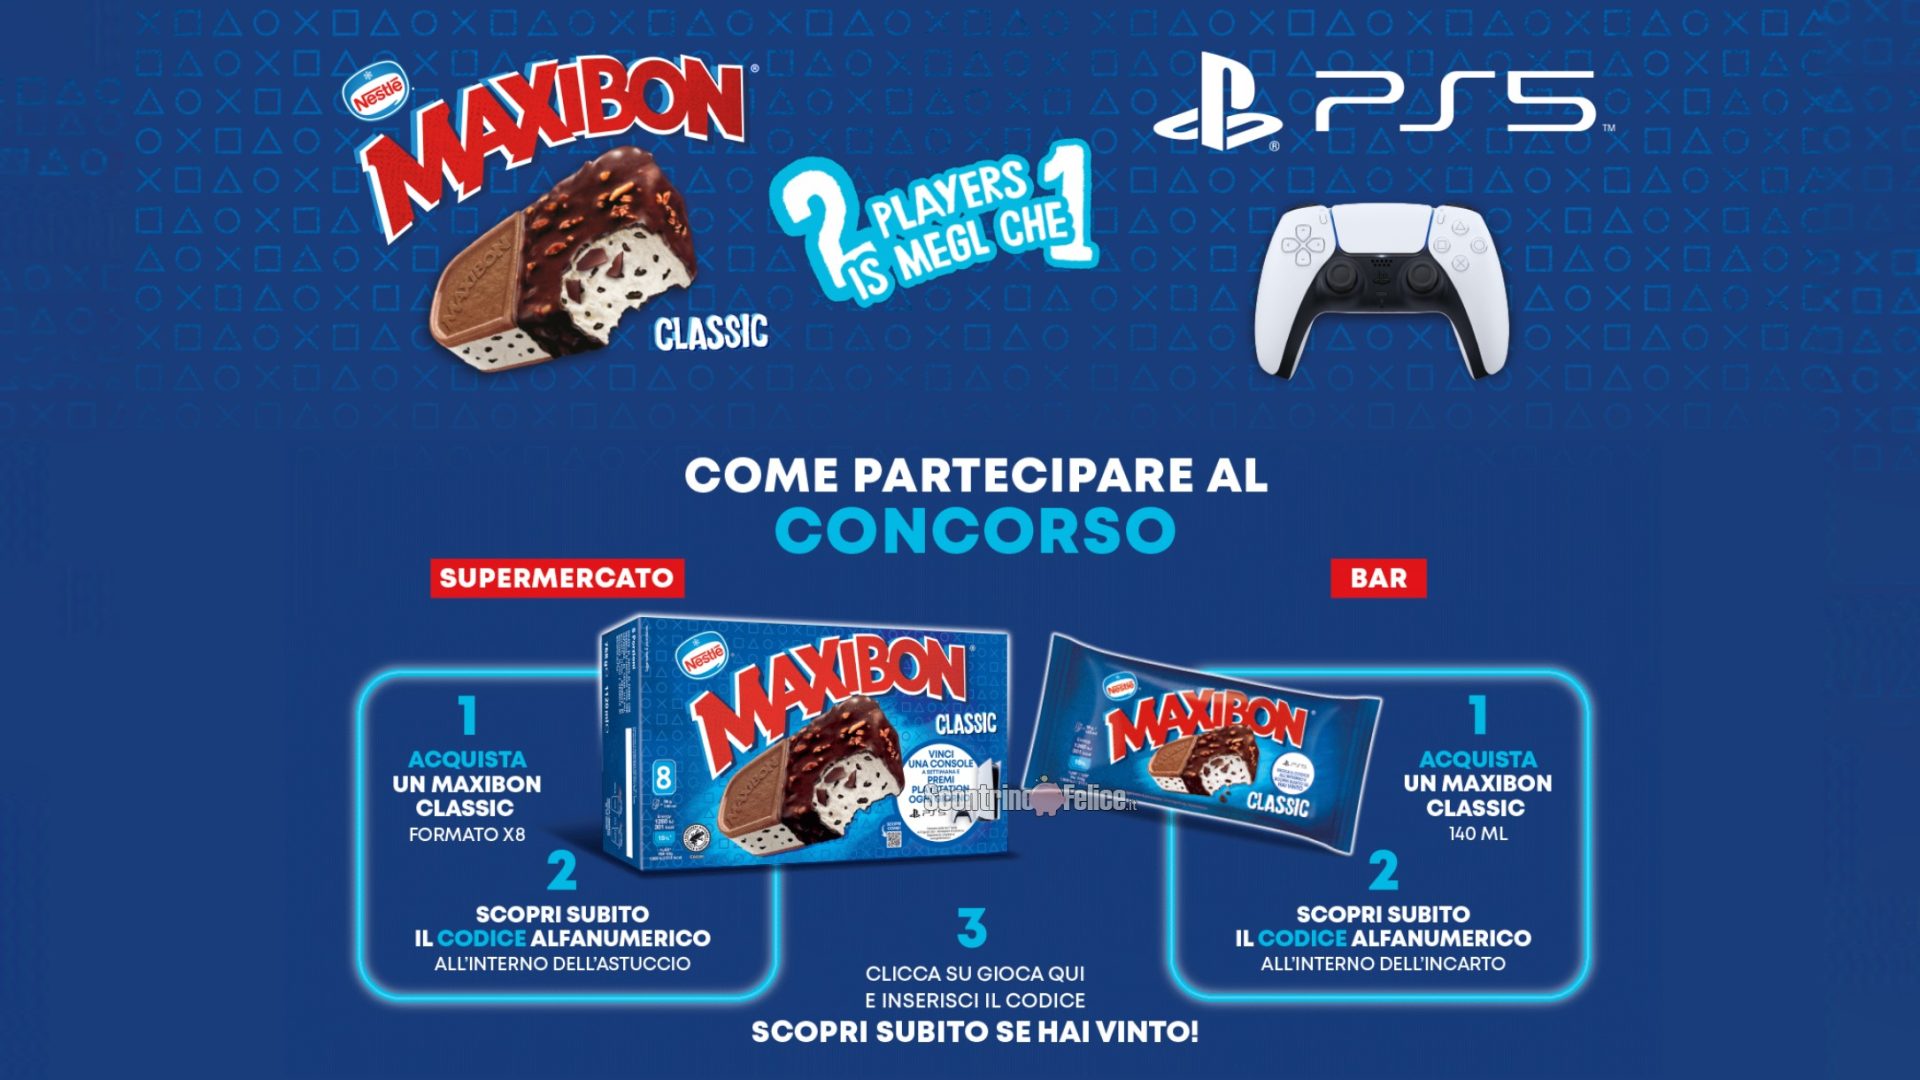 Concorso Maxibon “Two Players is megl’ che uan”: vinci premi Playstation